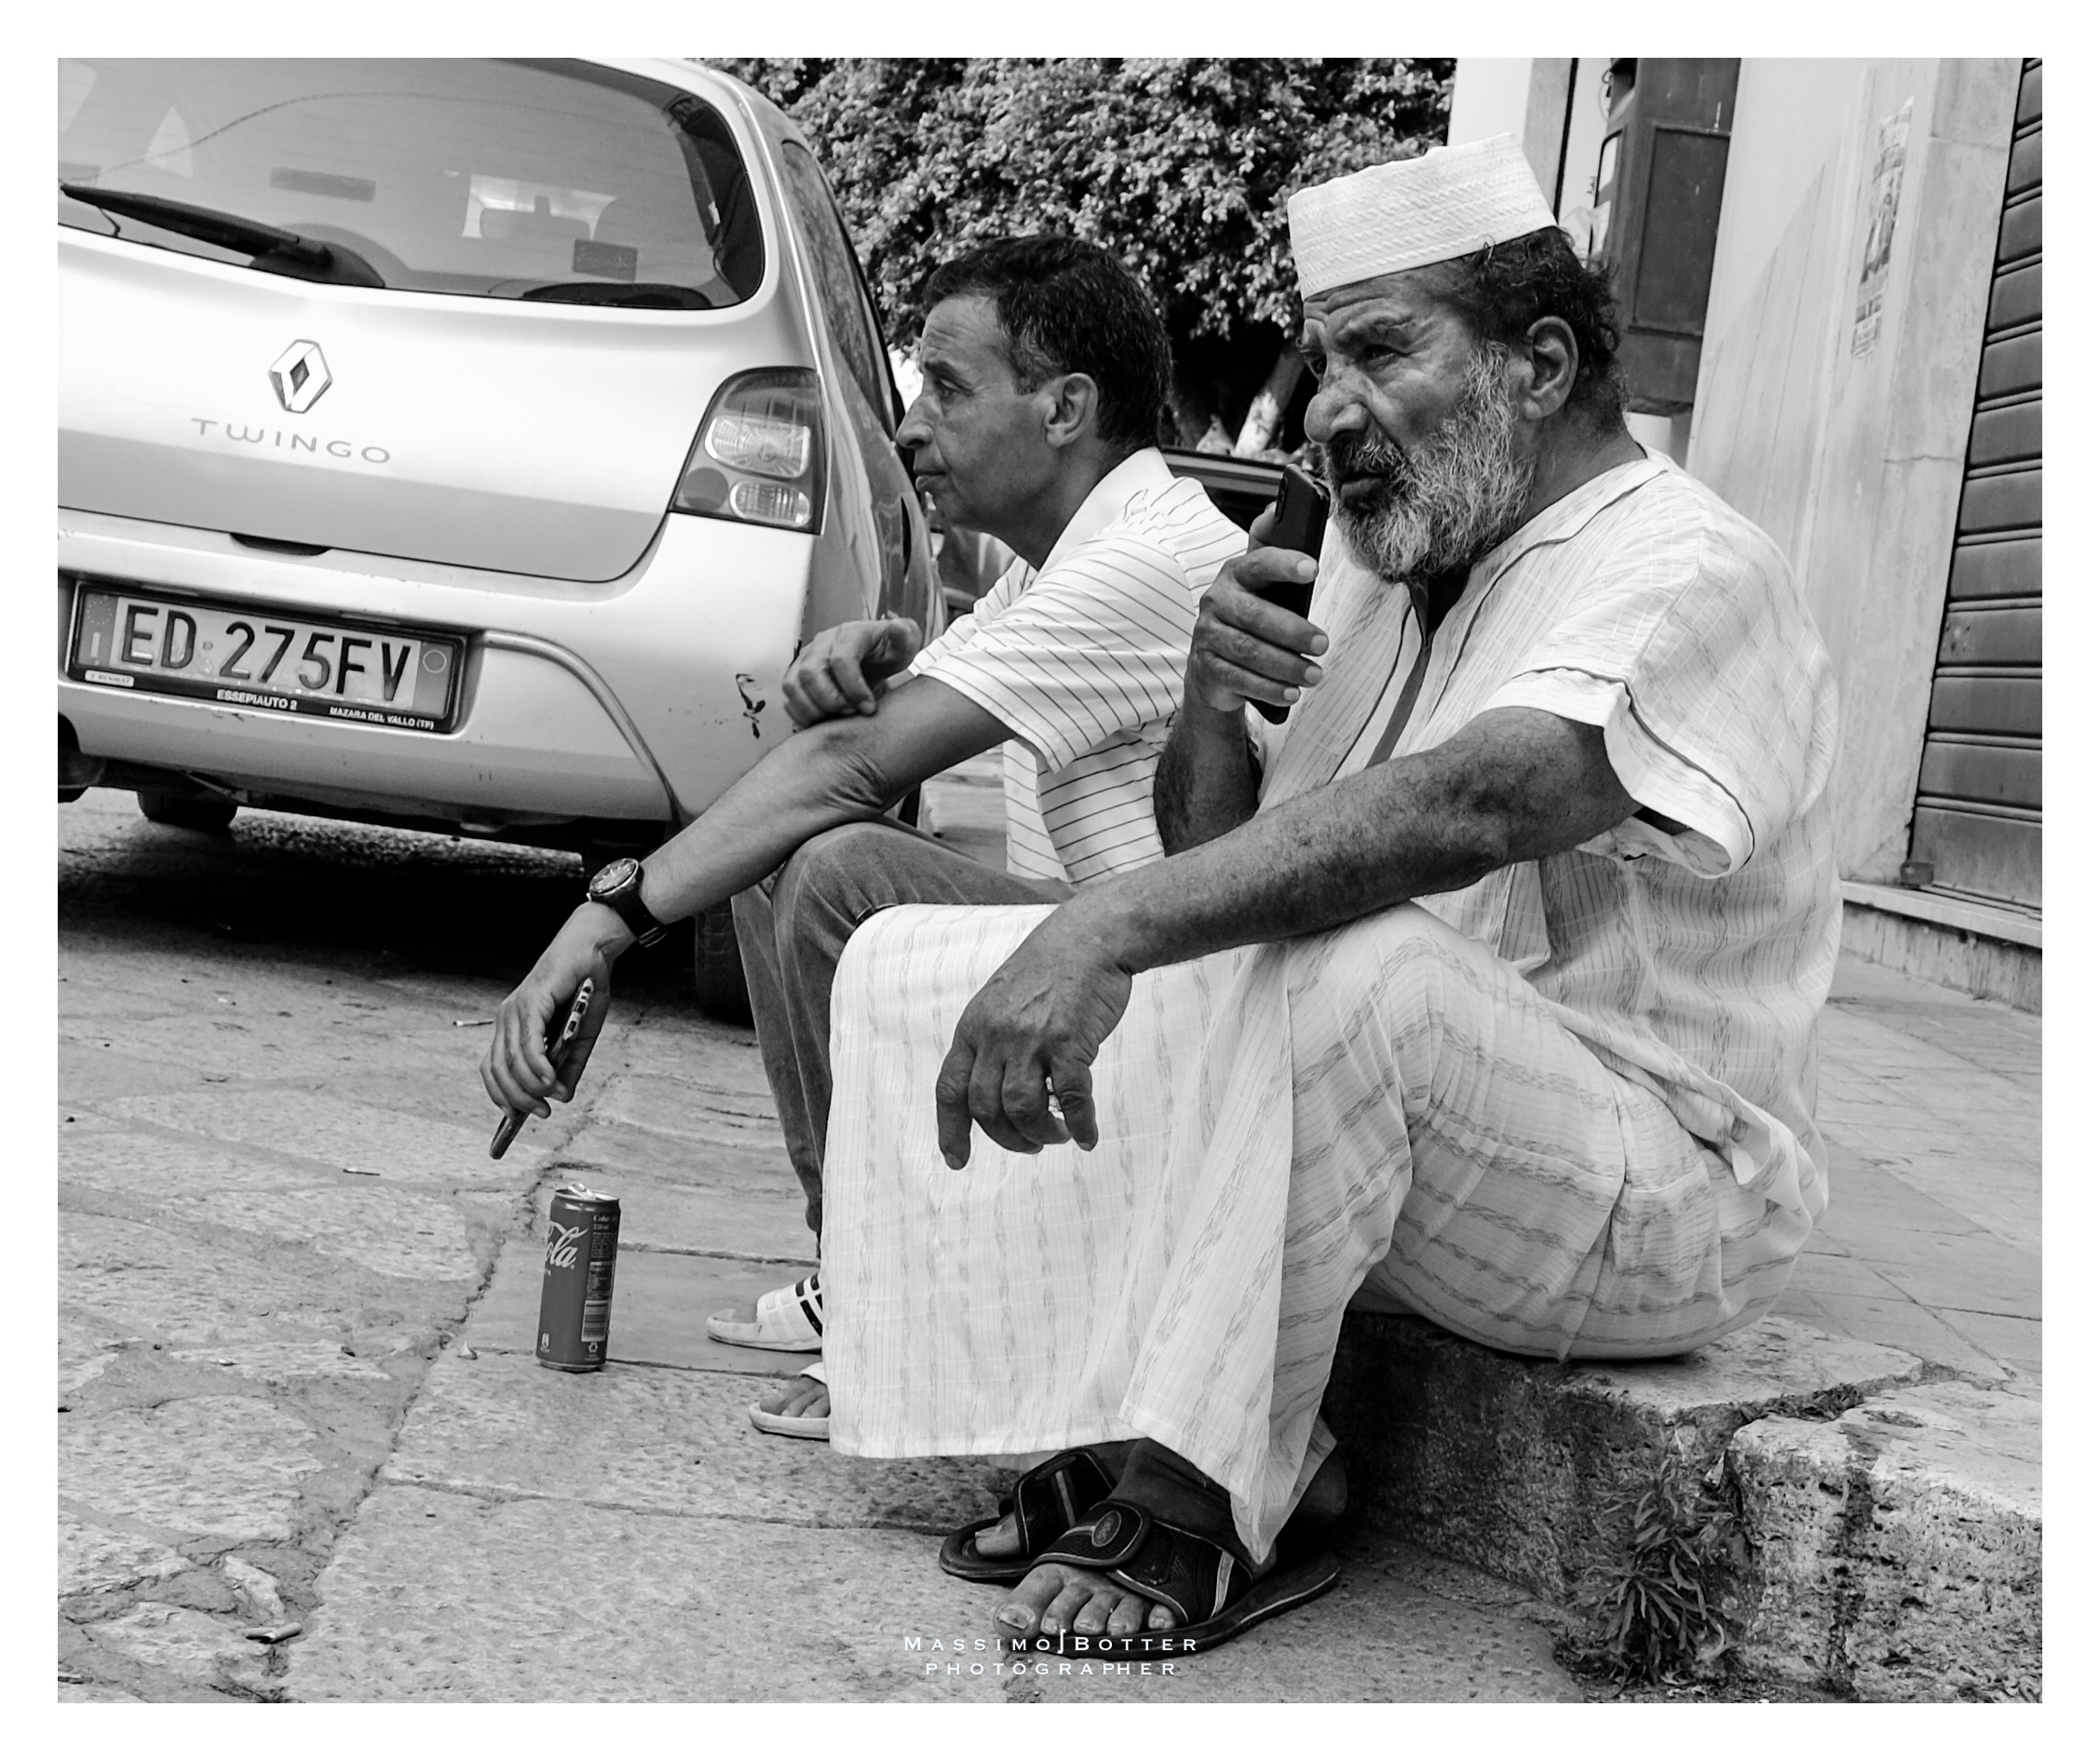 Arabs in Marsala...